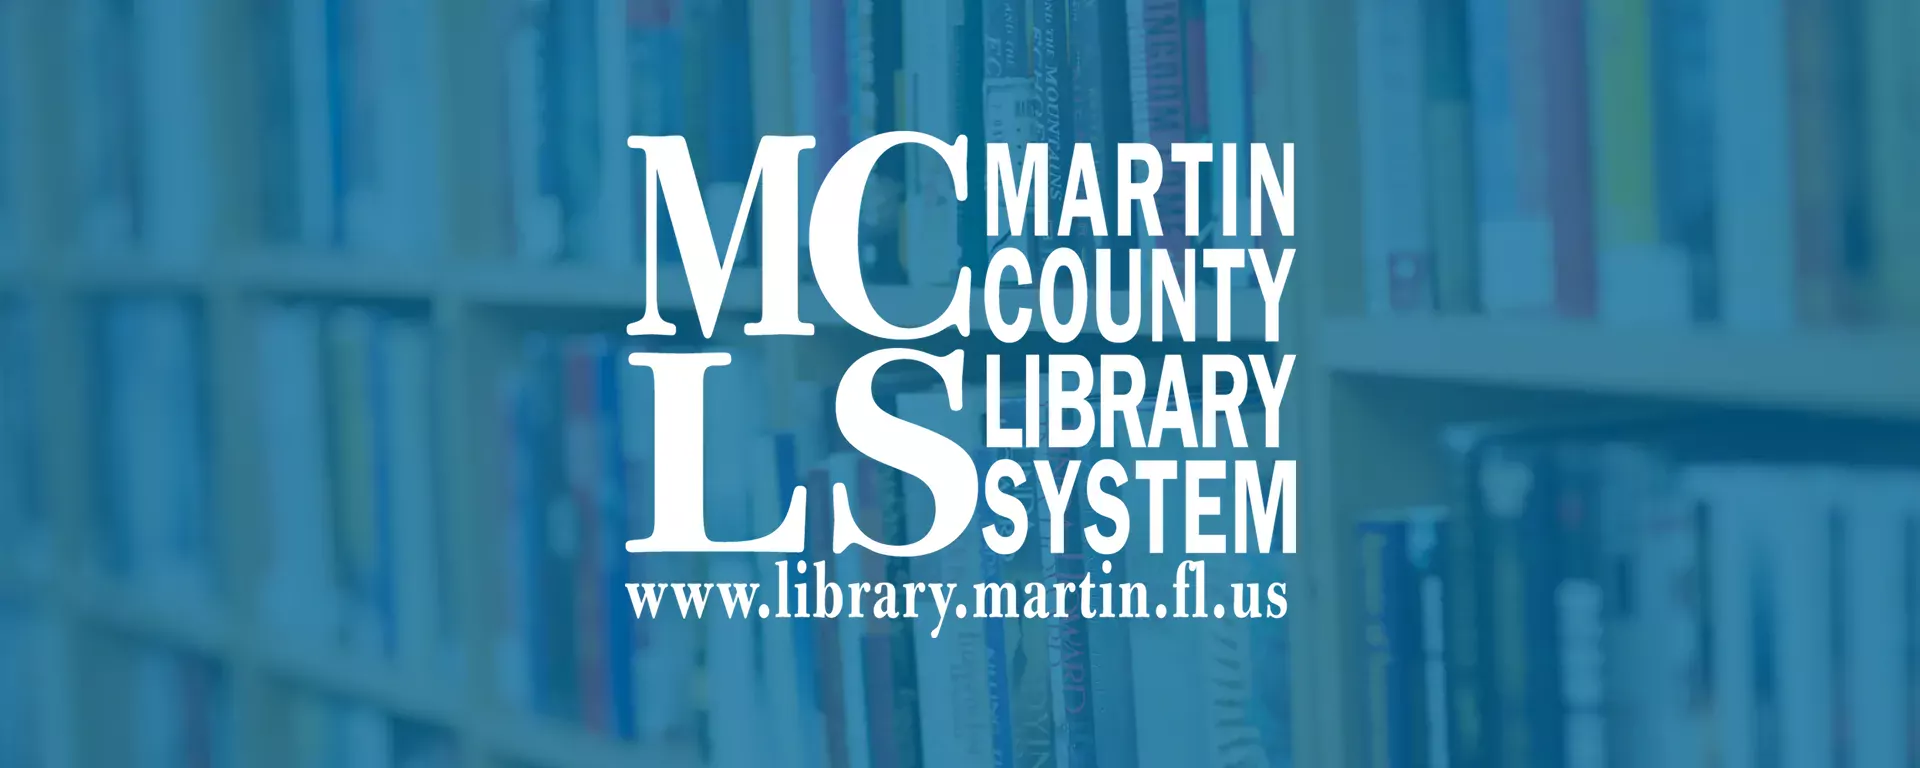 Martin County Library System logo